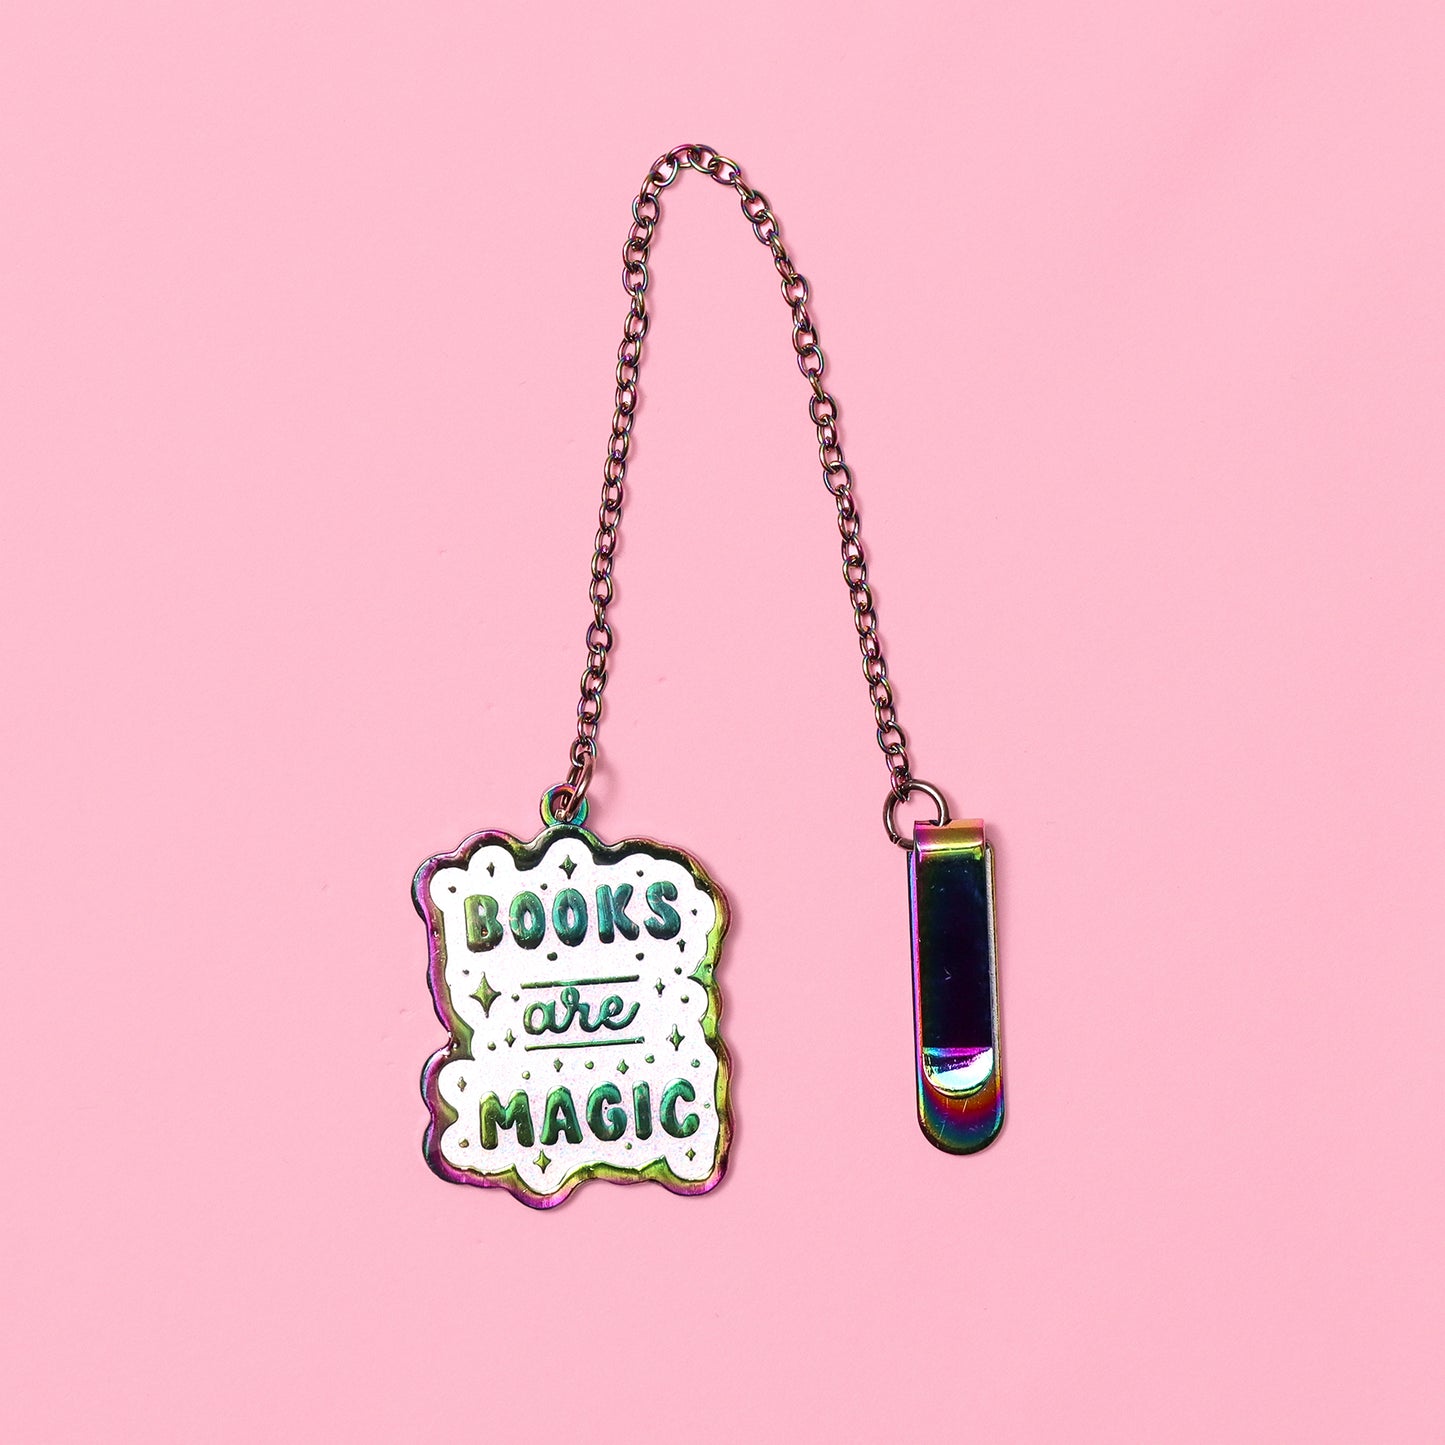 Books are magic glitter enamel bookmark with rainbow chain